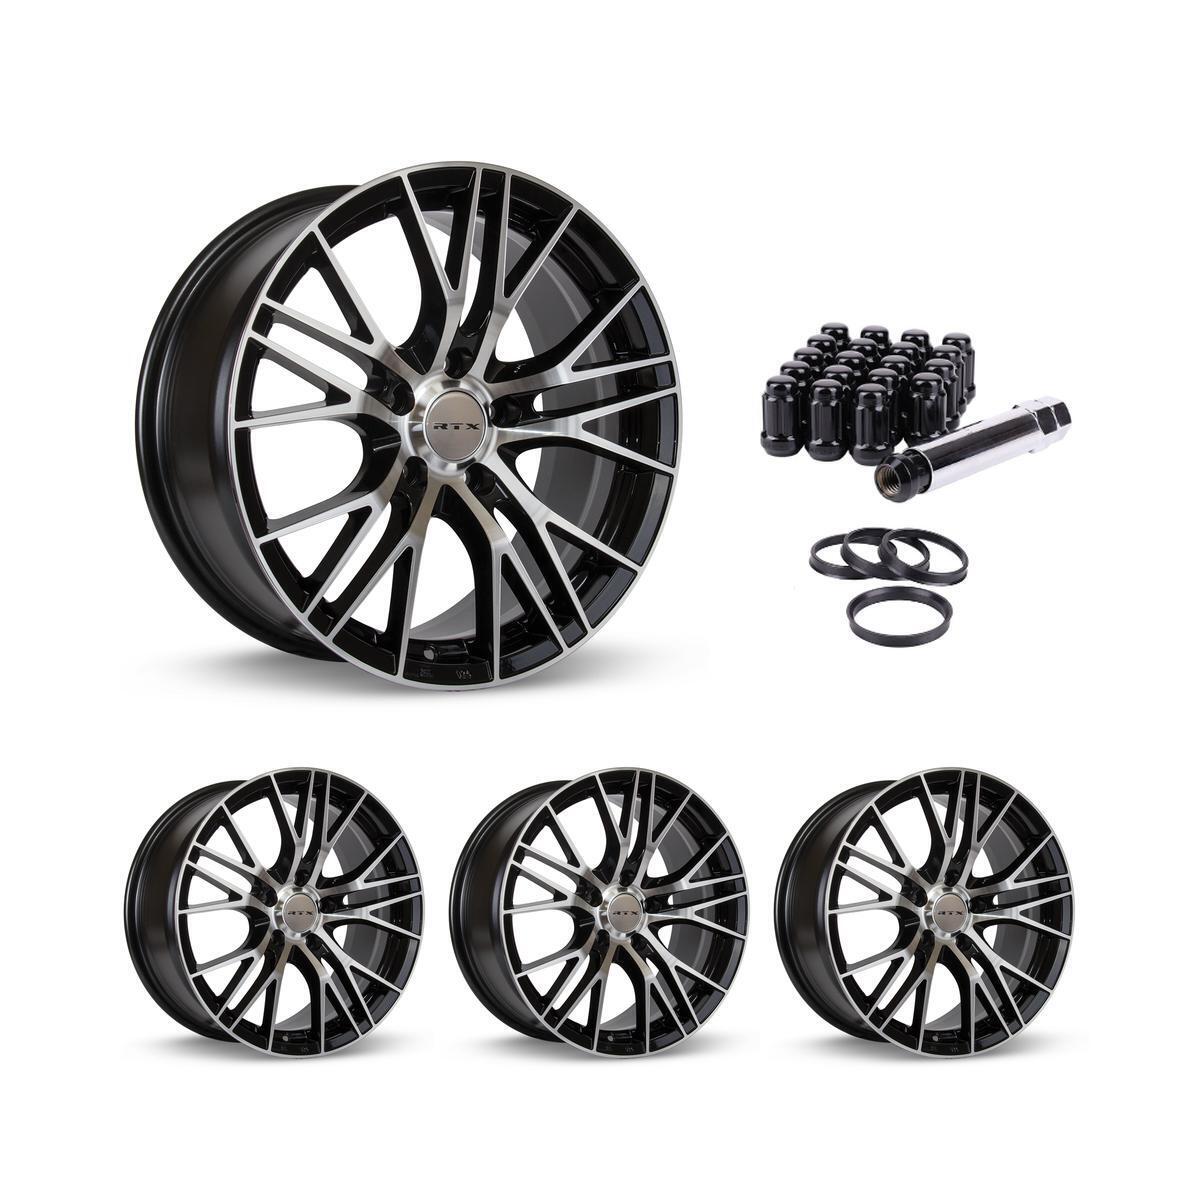 Wheel Rims Set with Black Lug Nuts Kit for 19 BMW 340i GT xDrive P840575 18 inch